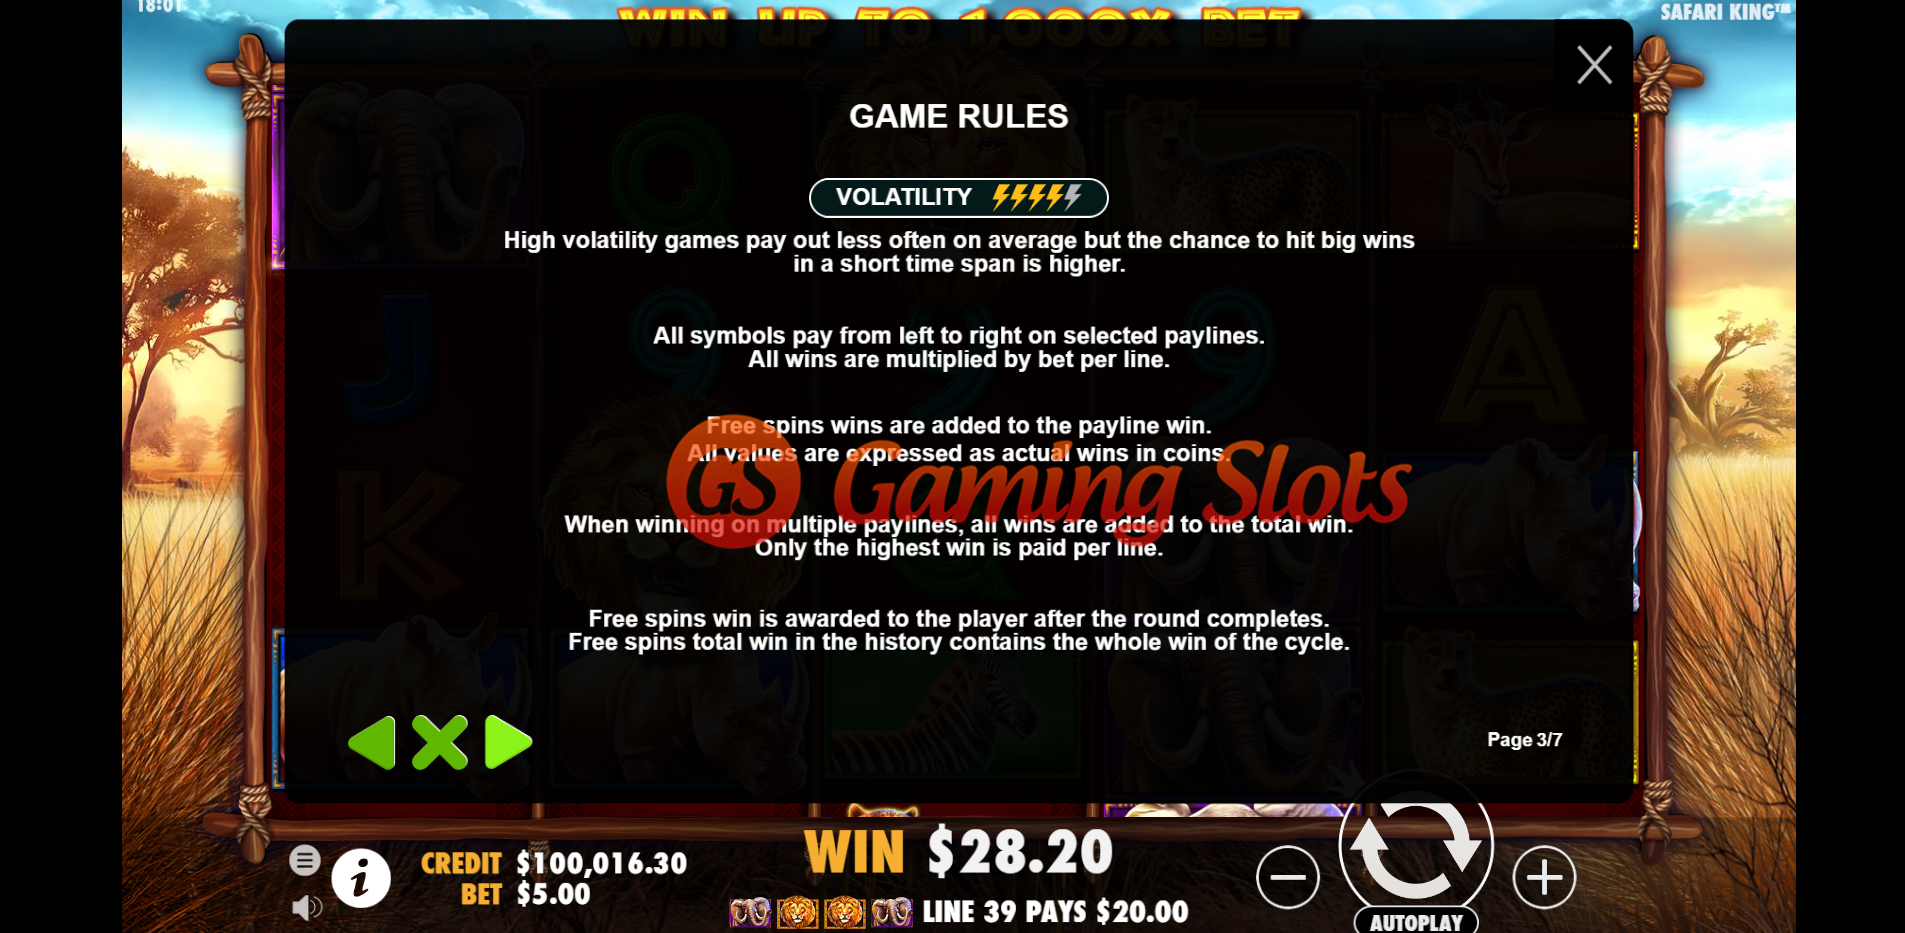 Game Rules for Safari King slot by Pragmatic Play